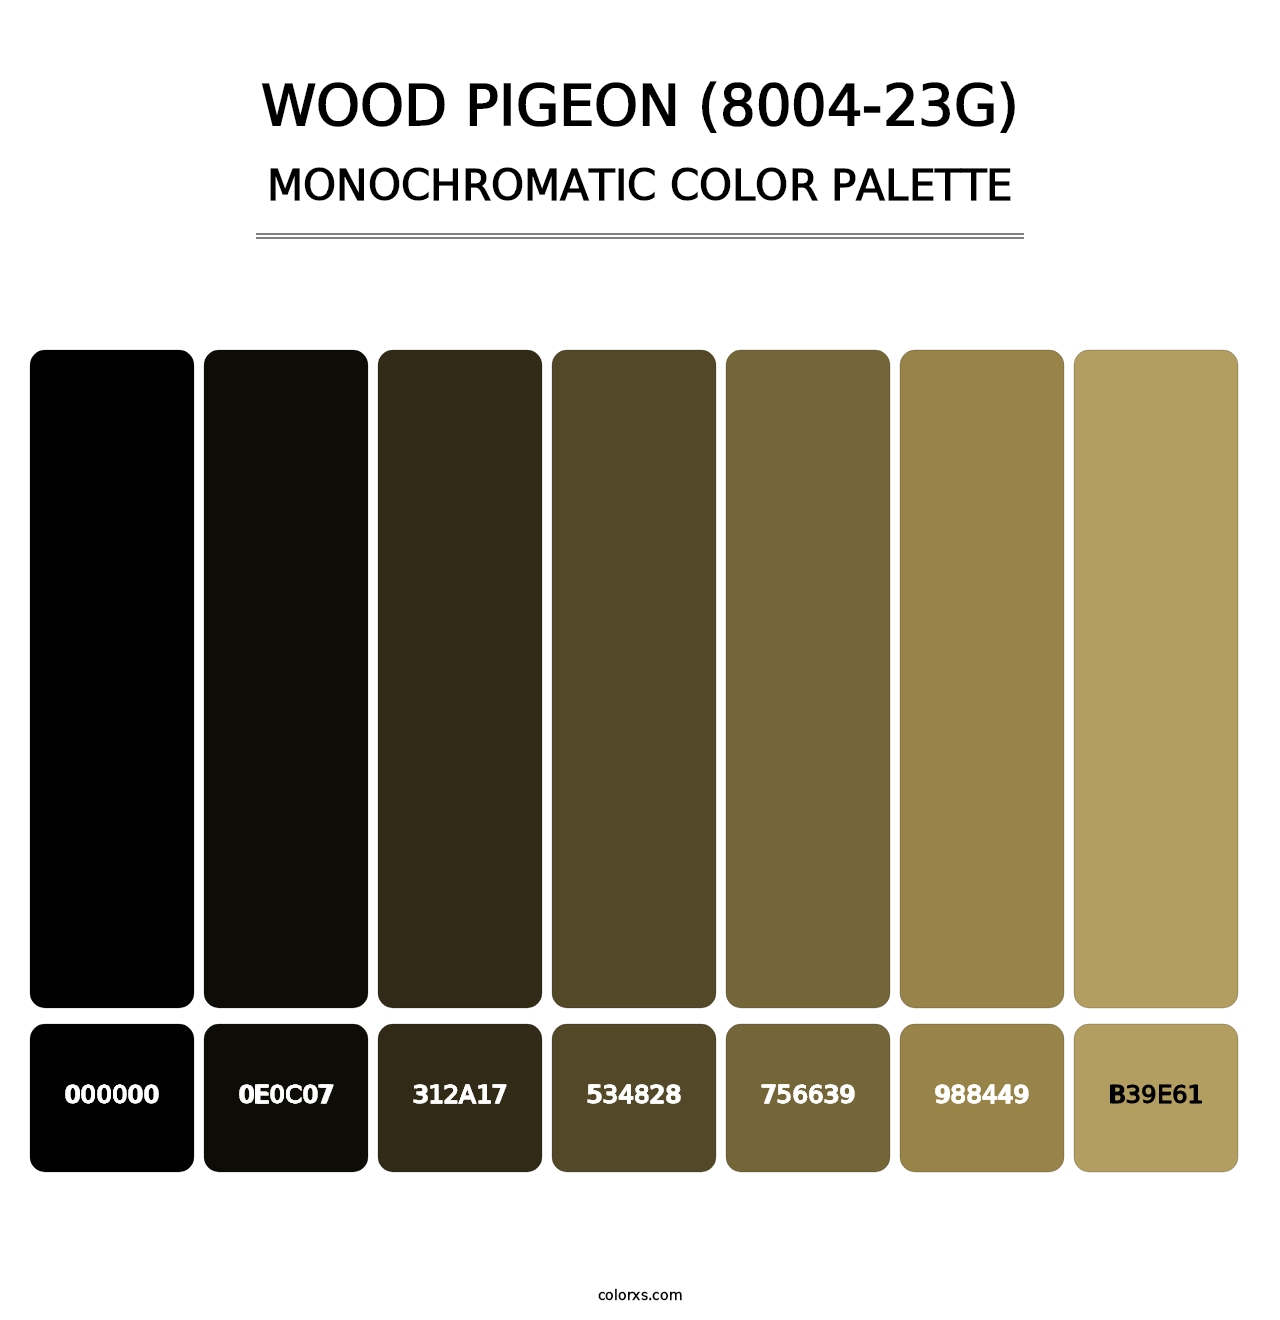 Wood Pigeon (8004-23G) - Monochromatic Color Palette